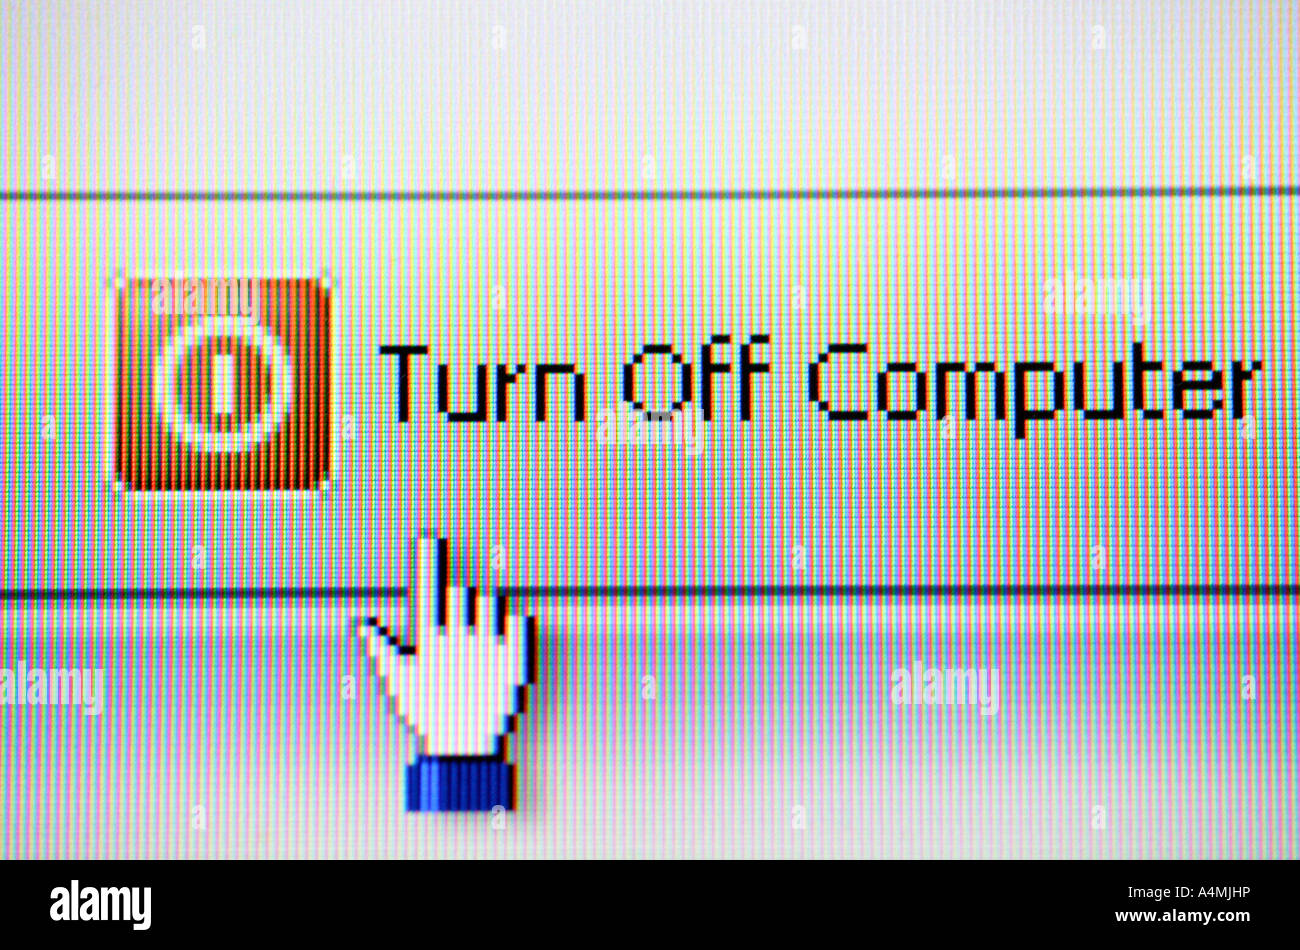 Computer program display to turn off computer Stock Photo